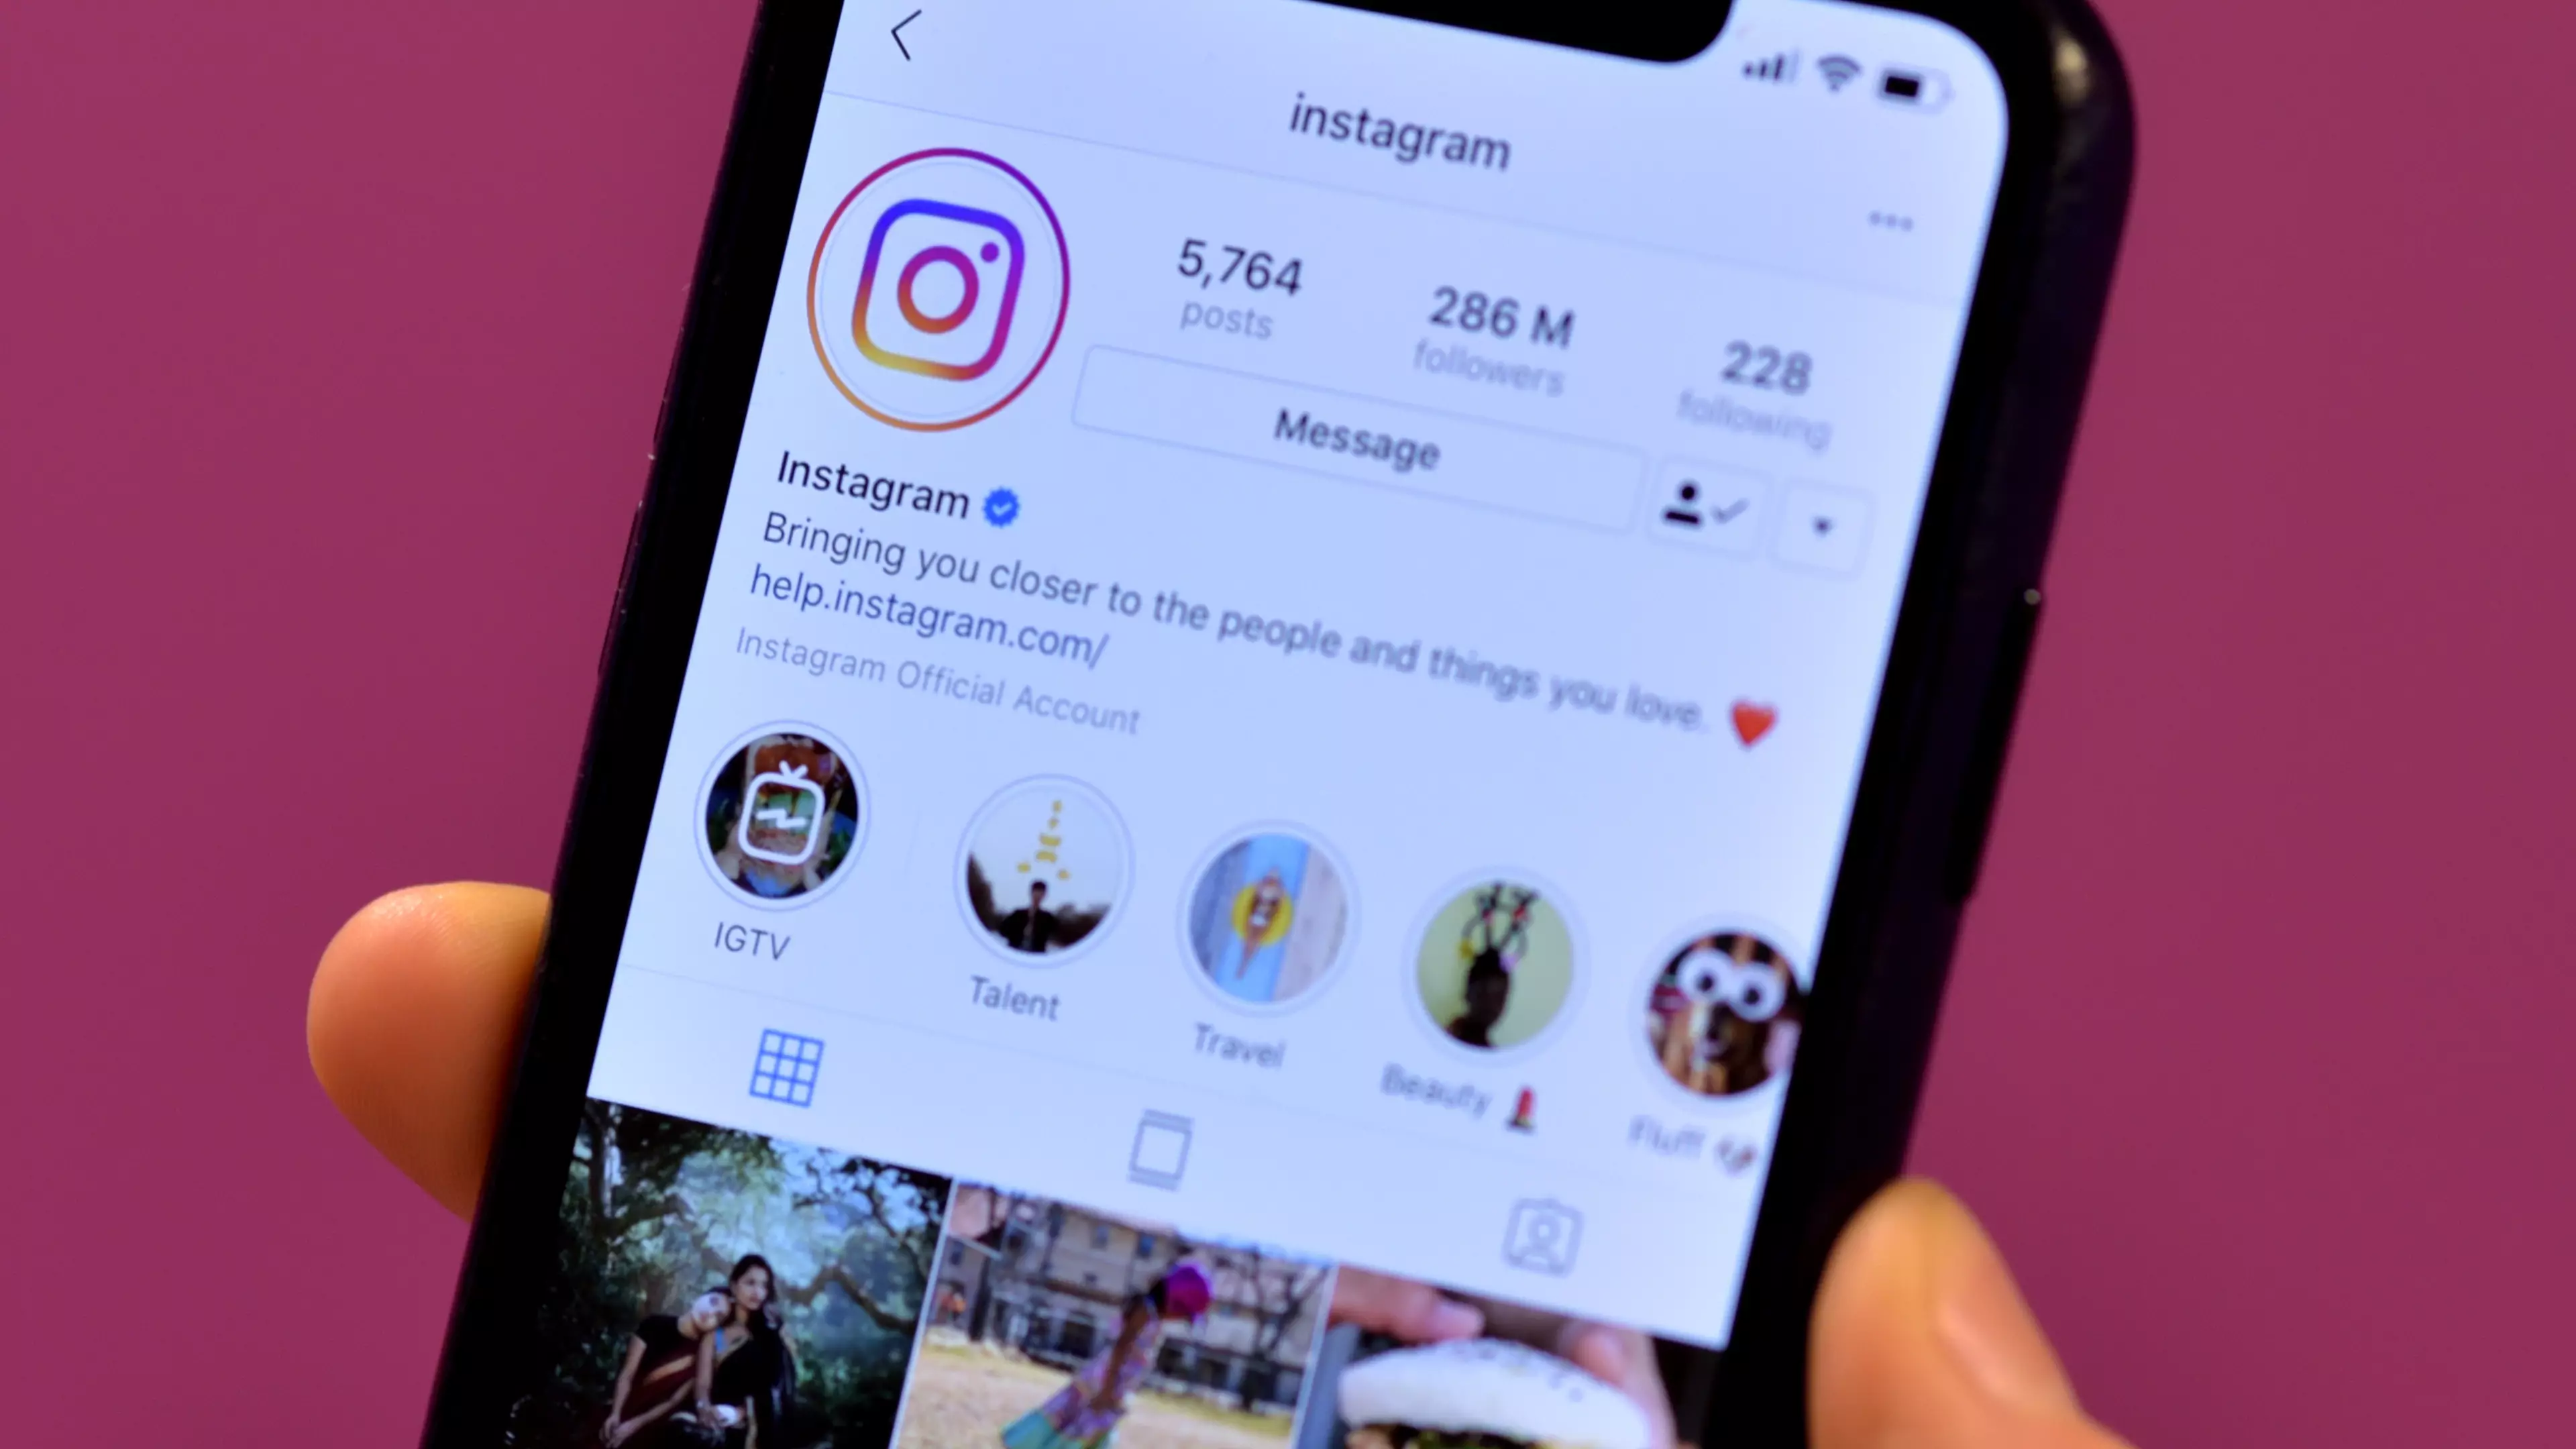 Aussie Icon Brown Cardigan Has Been Kicked Off Instagram